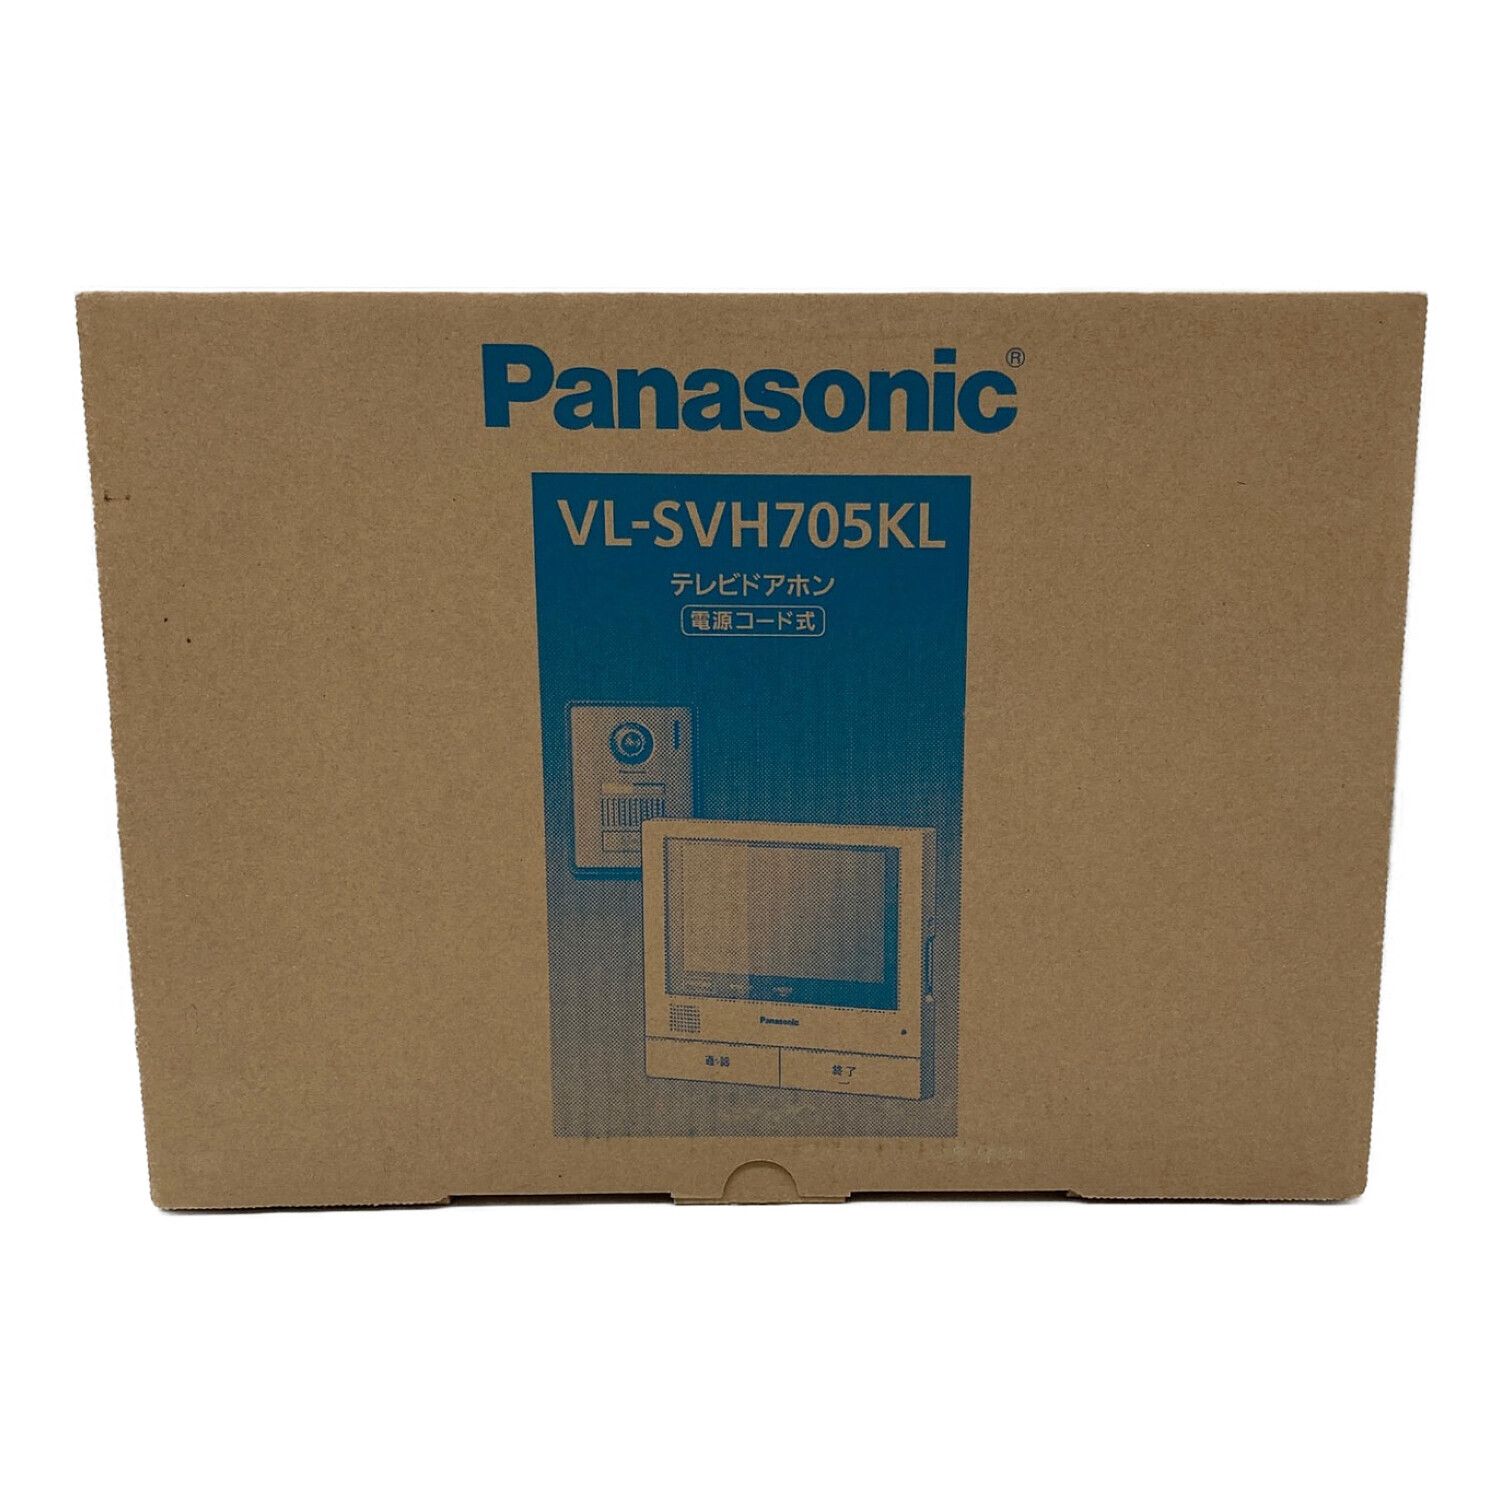 Panasonic VL-SVH705KLテレビドアホン 電源コード式-